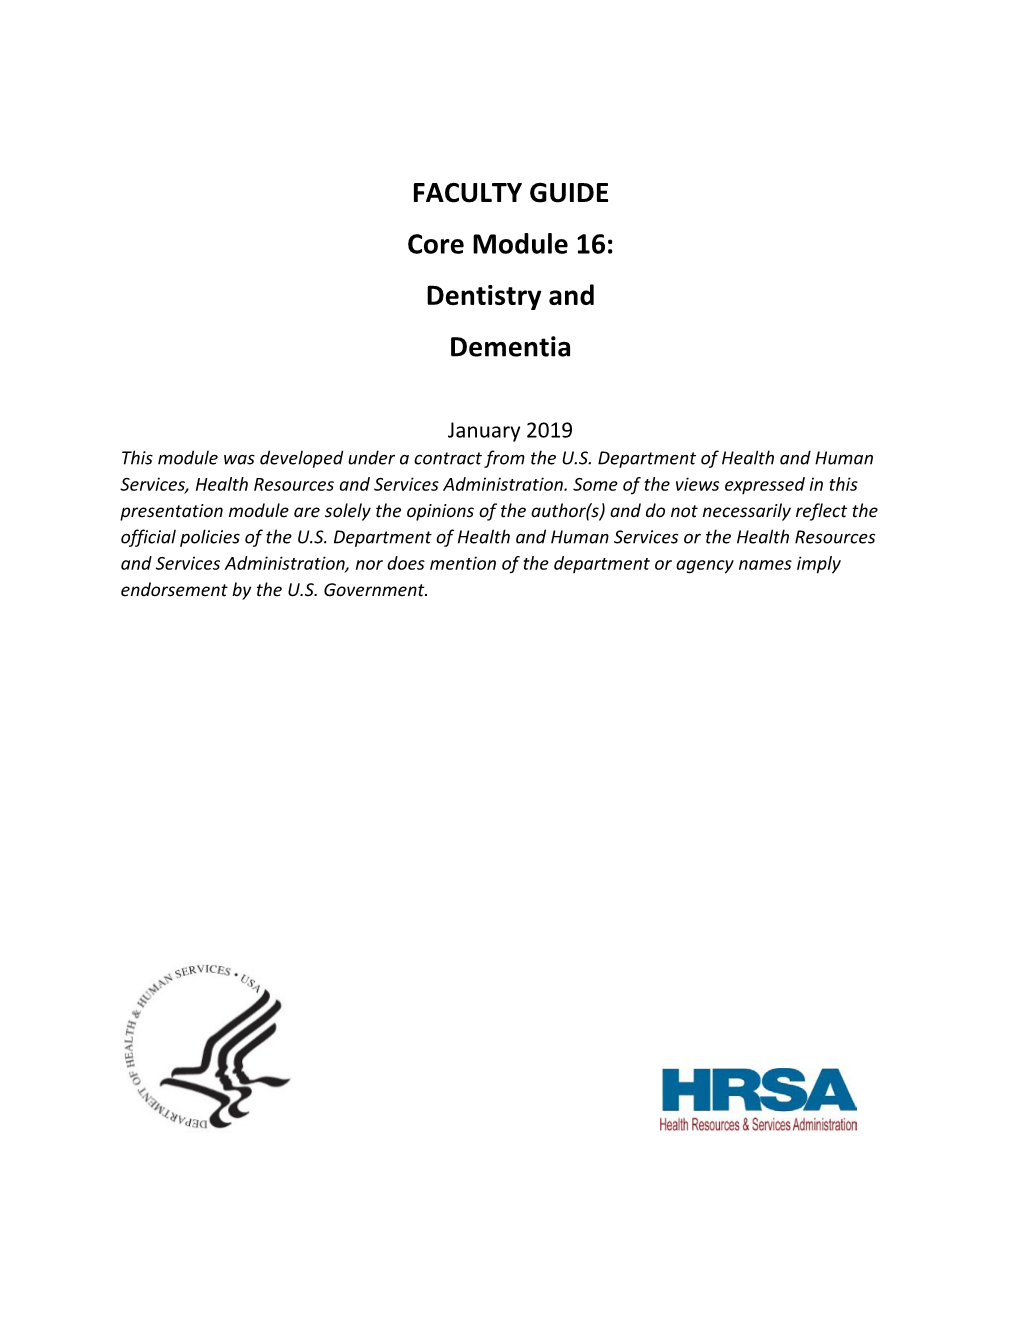 Facility Guide Core Module 16: Dentistry and Dementia